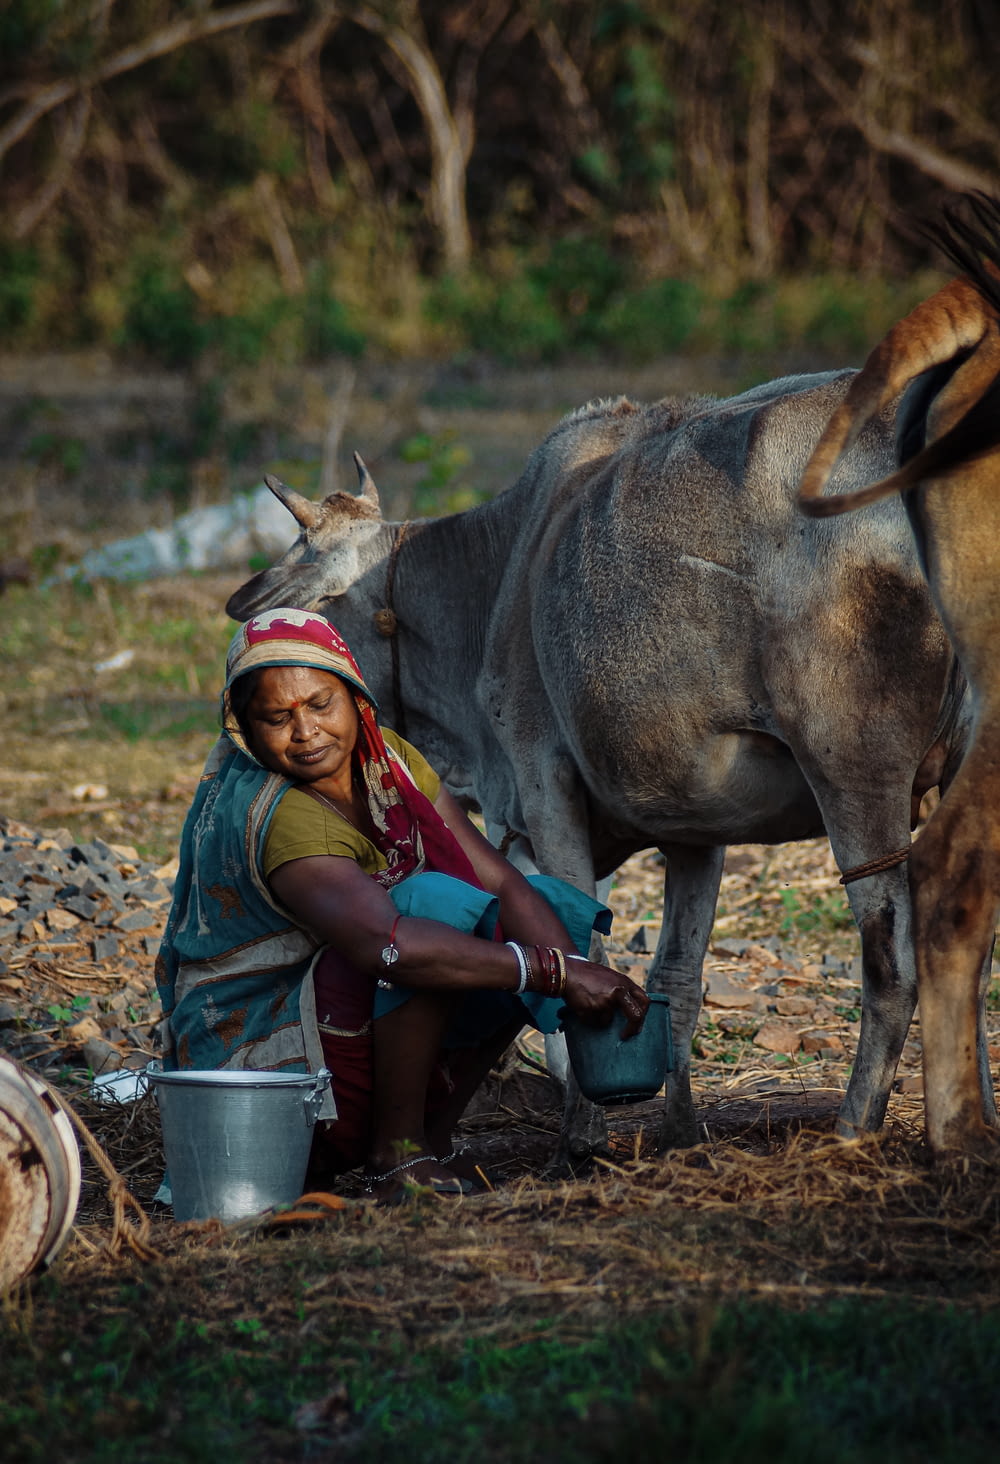 a woman is milking a cow in a field